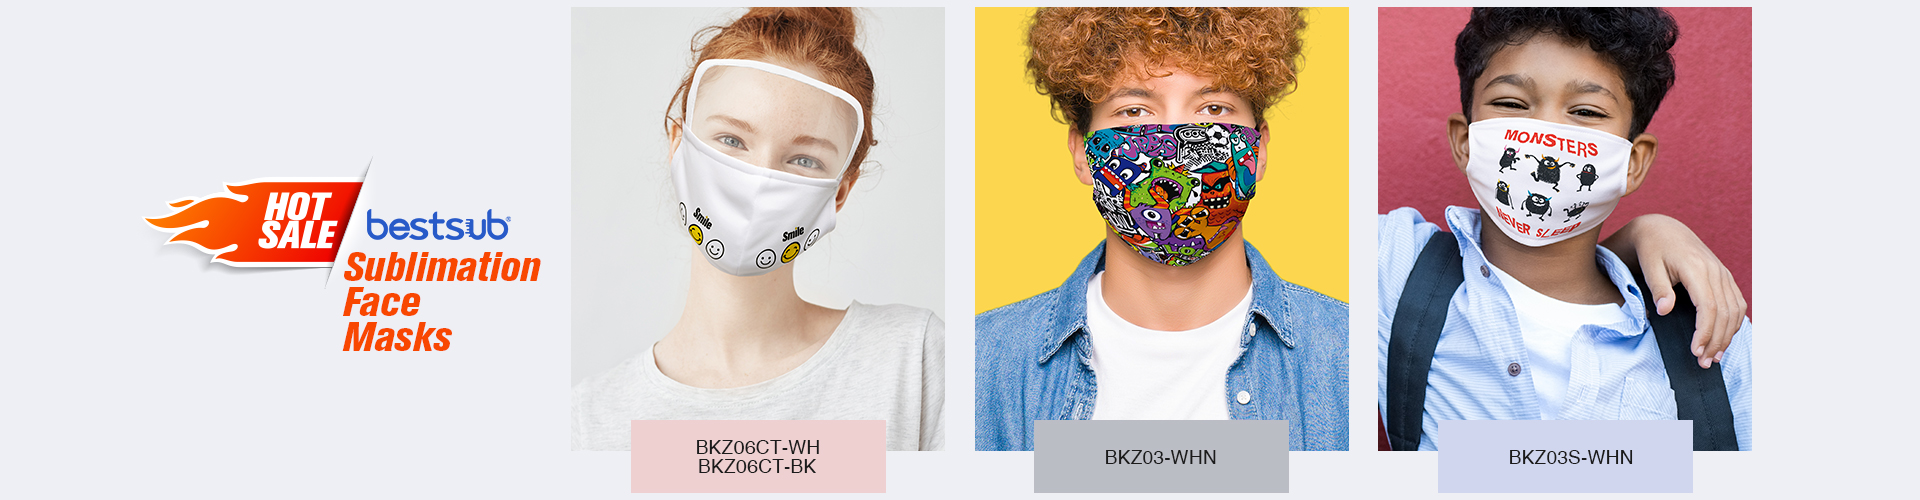 20200730 hot sale sublimation face mask new web